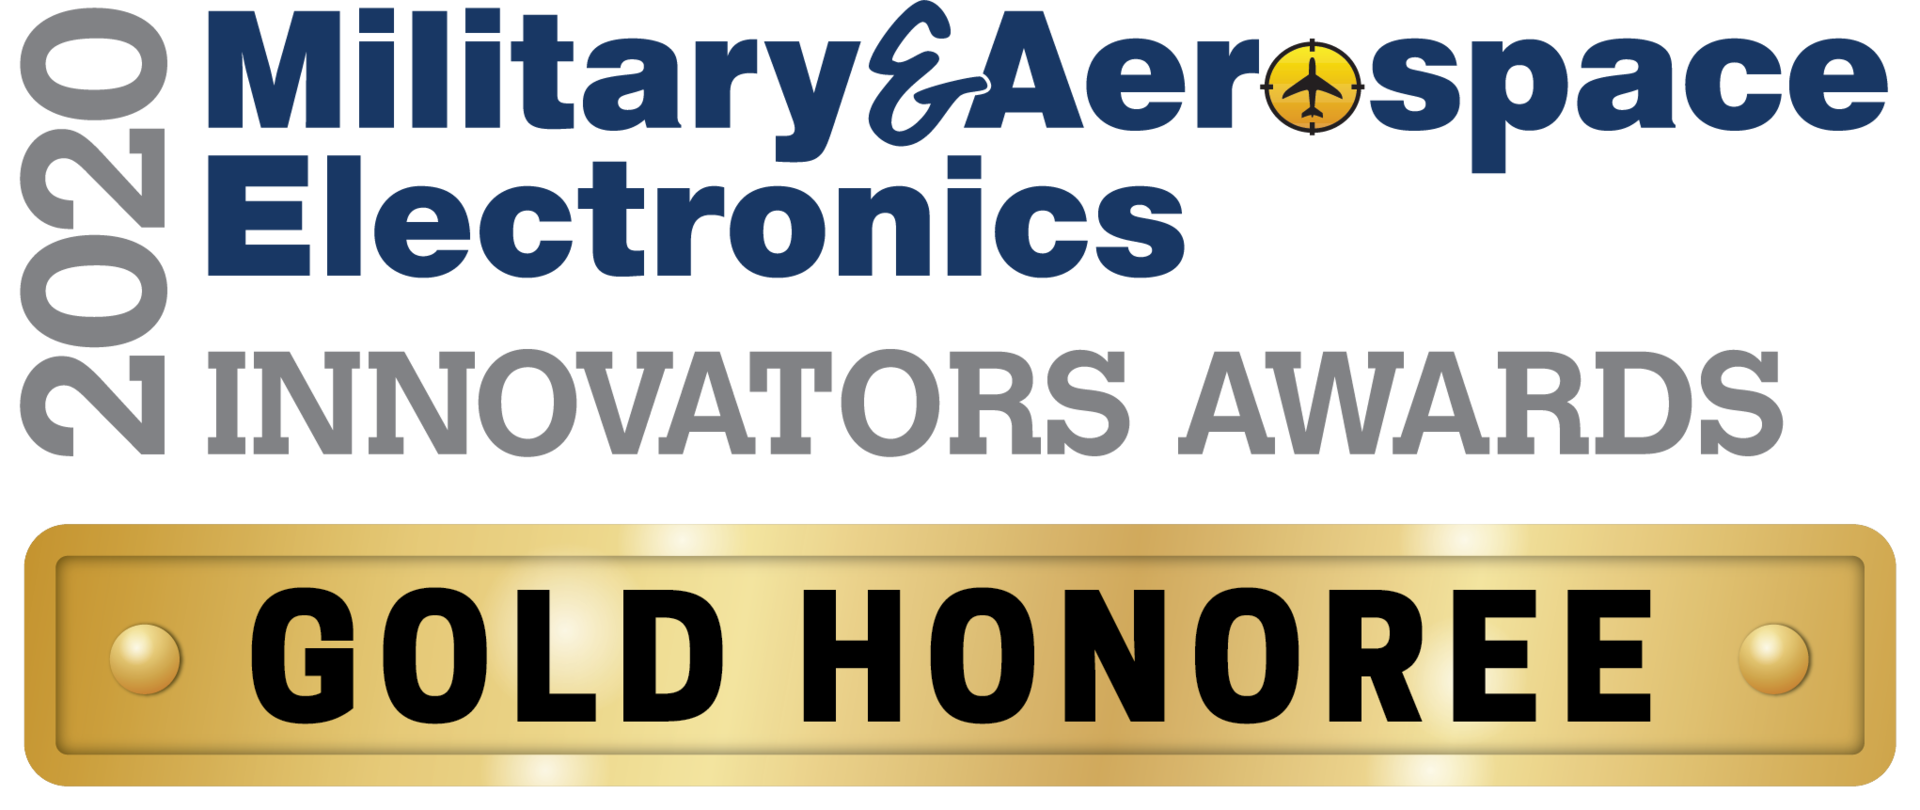 2020 Military & Aerospace Electronics Innovators Awards - Gold Honoree